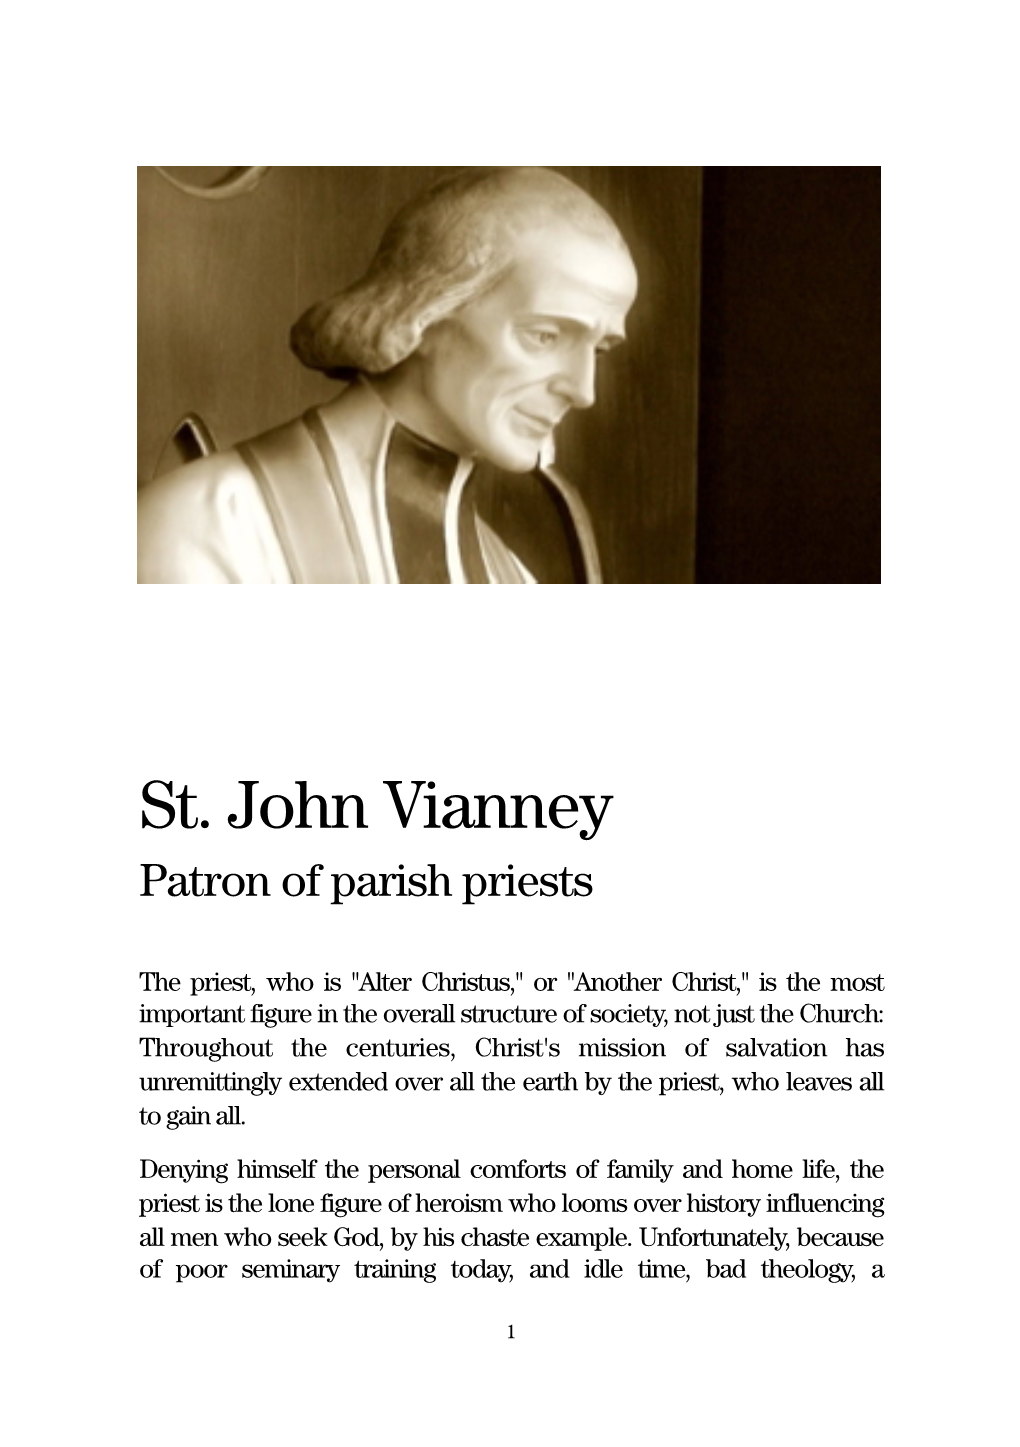 St. John Vianney Patron of Parish Priests